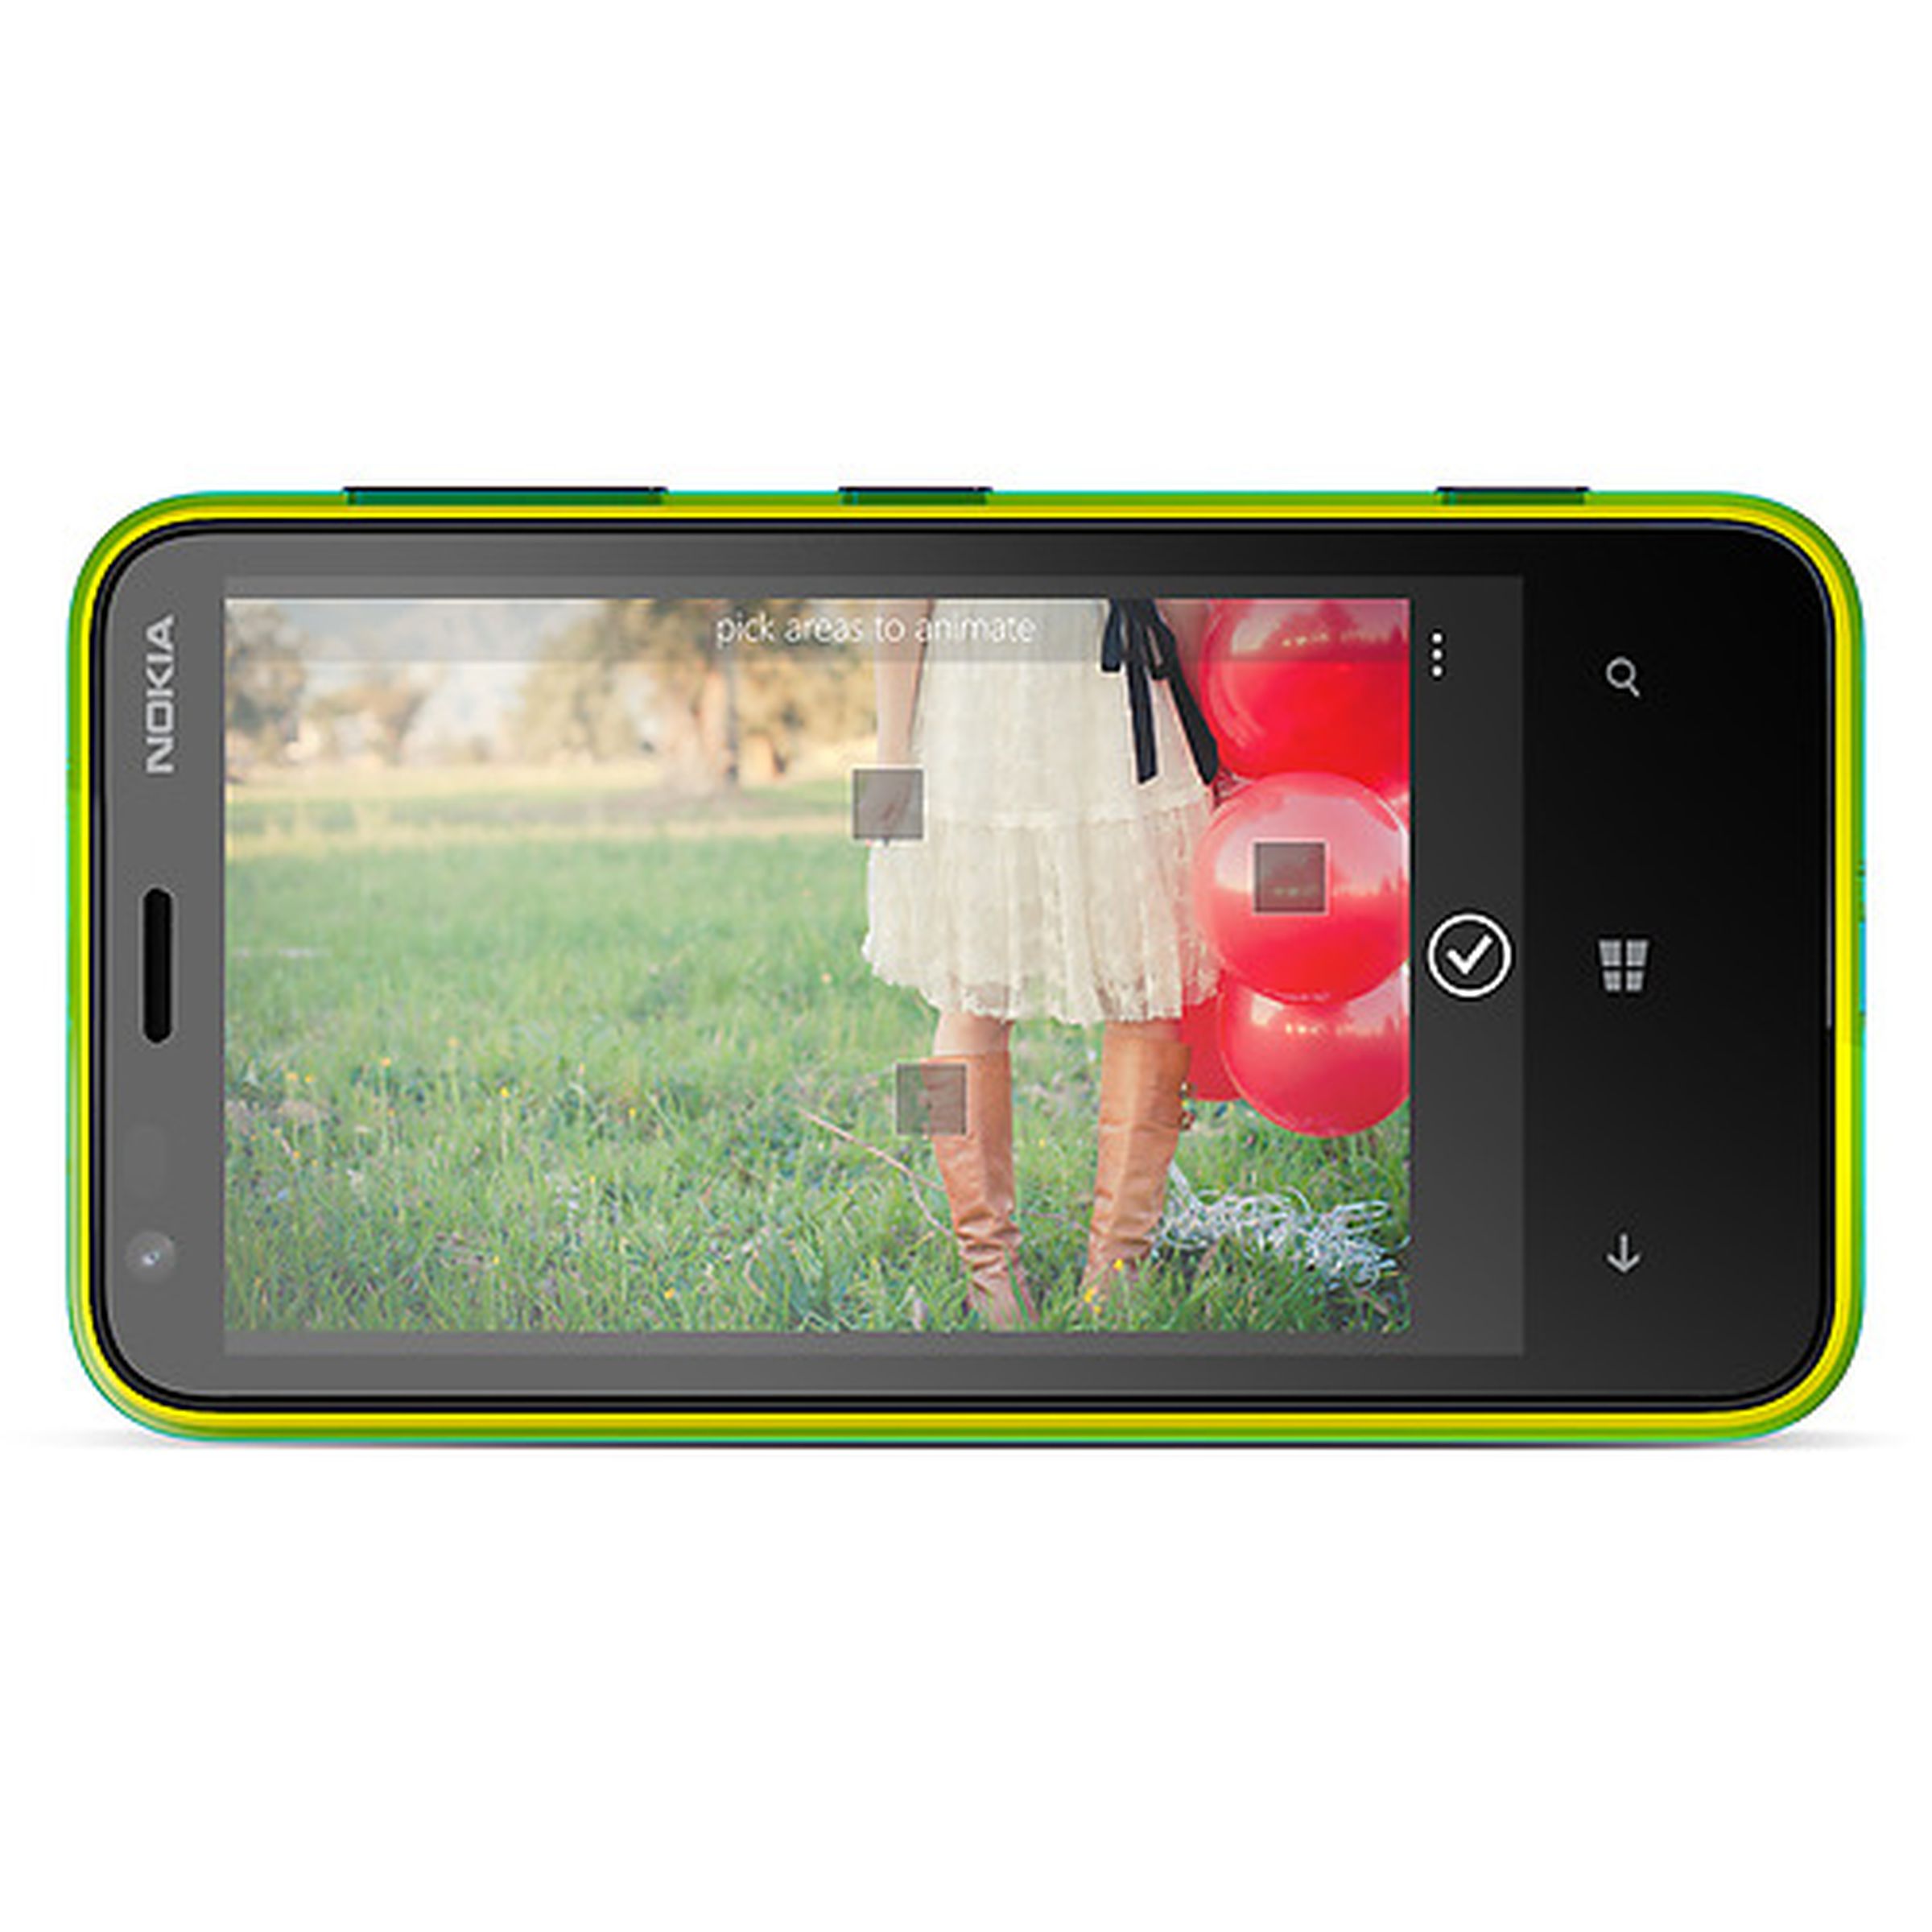 Nokia Lumia 620 pictures